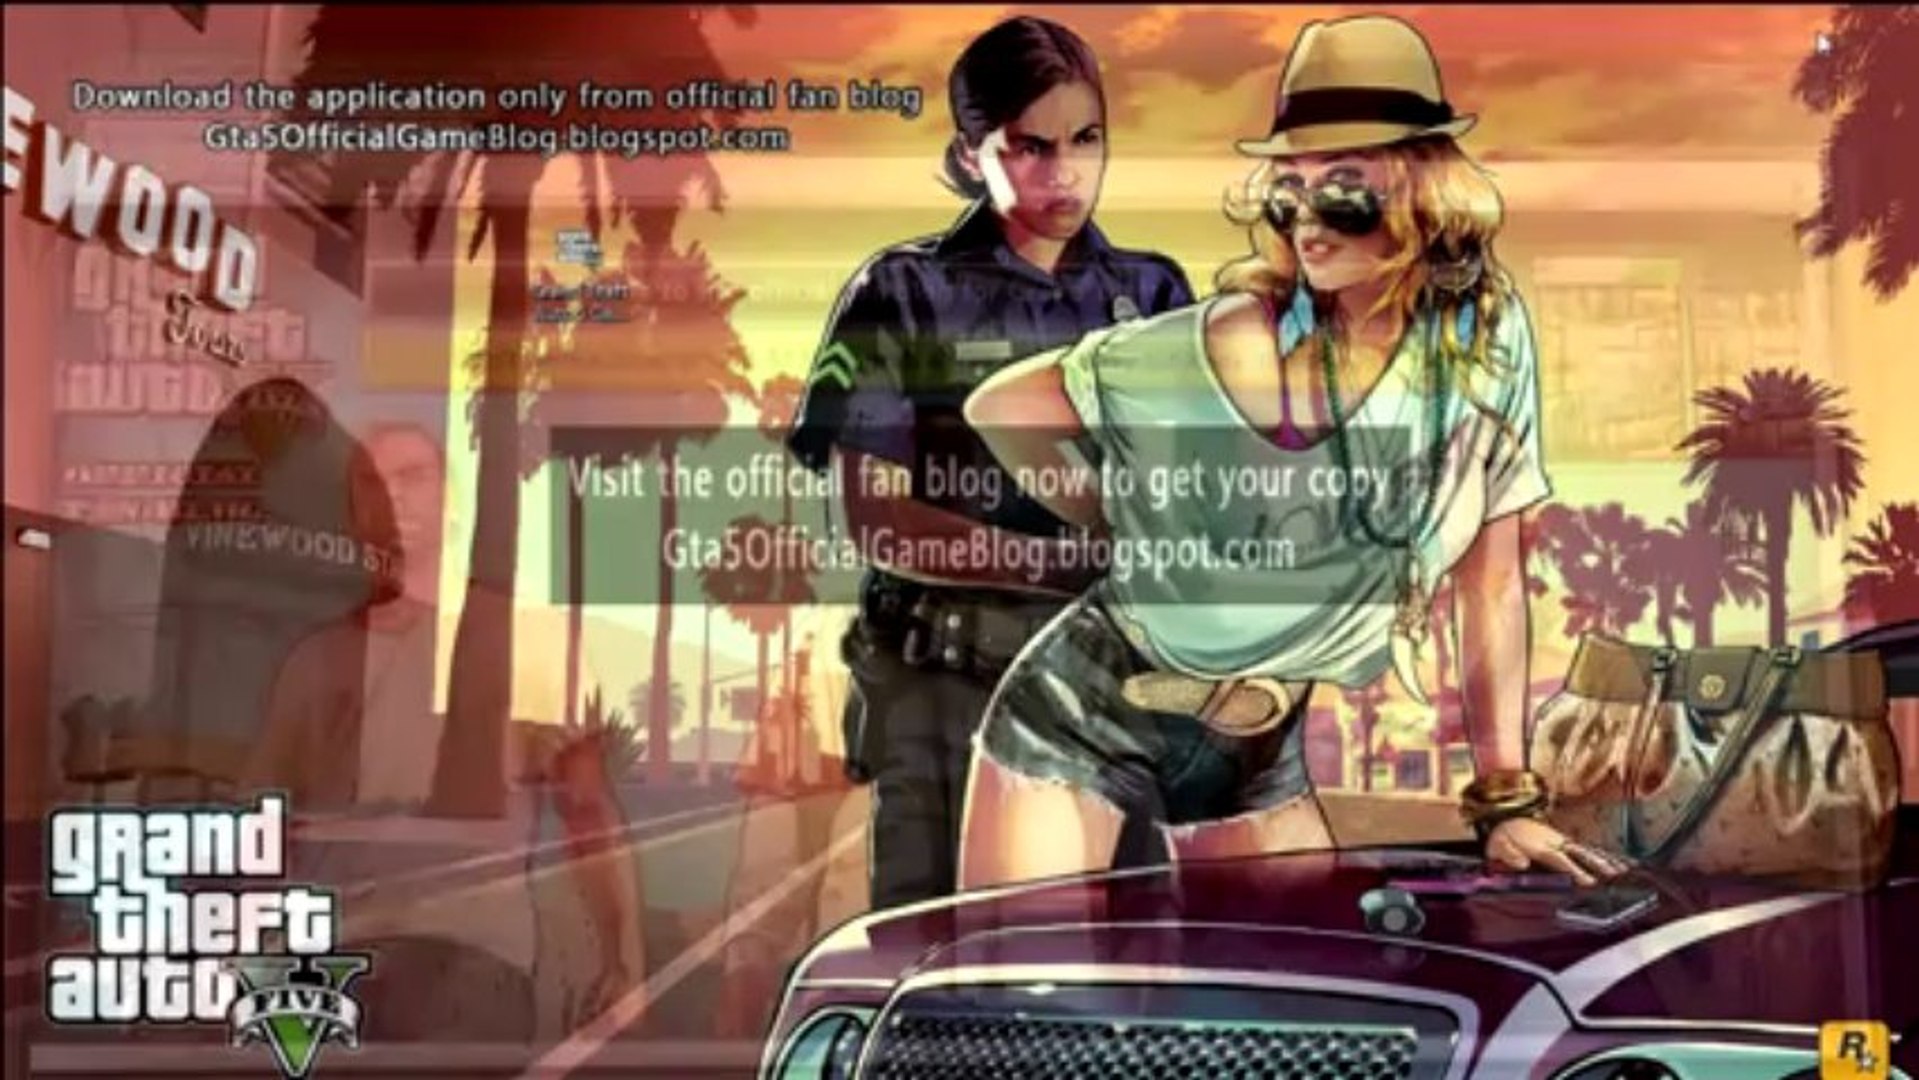 Gta 5 Grand Theft Auto V Free Ps3 Xbox 360 Keys 2013 September Mediafire Video Dailymotion